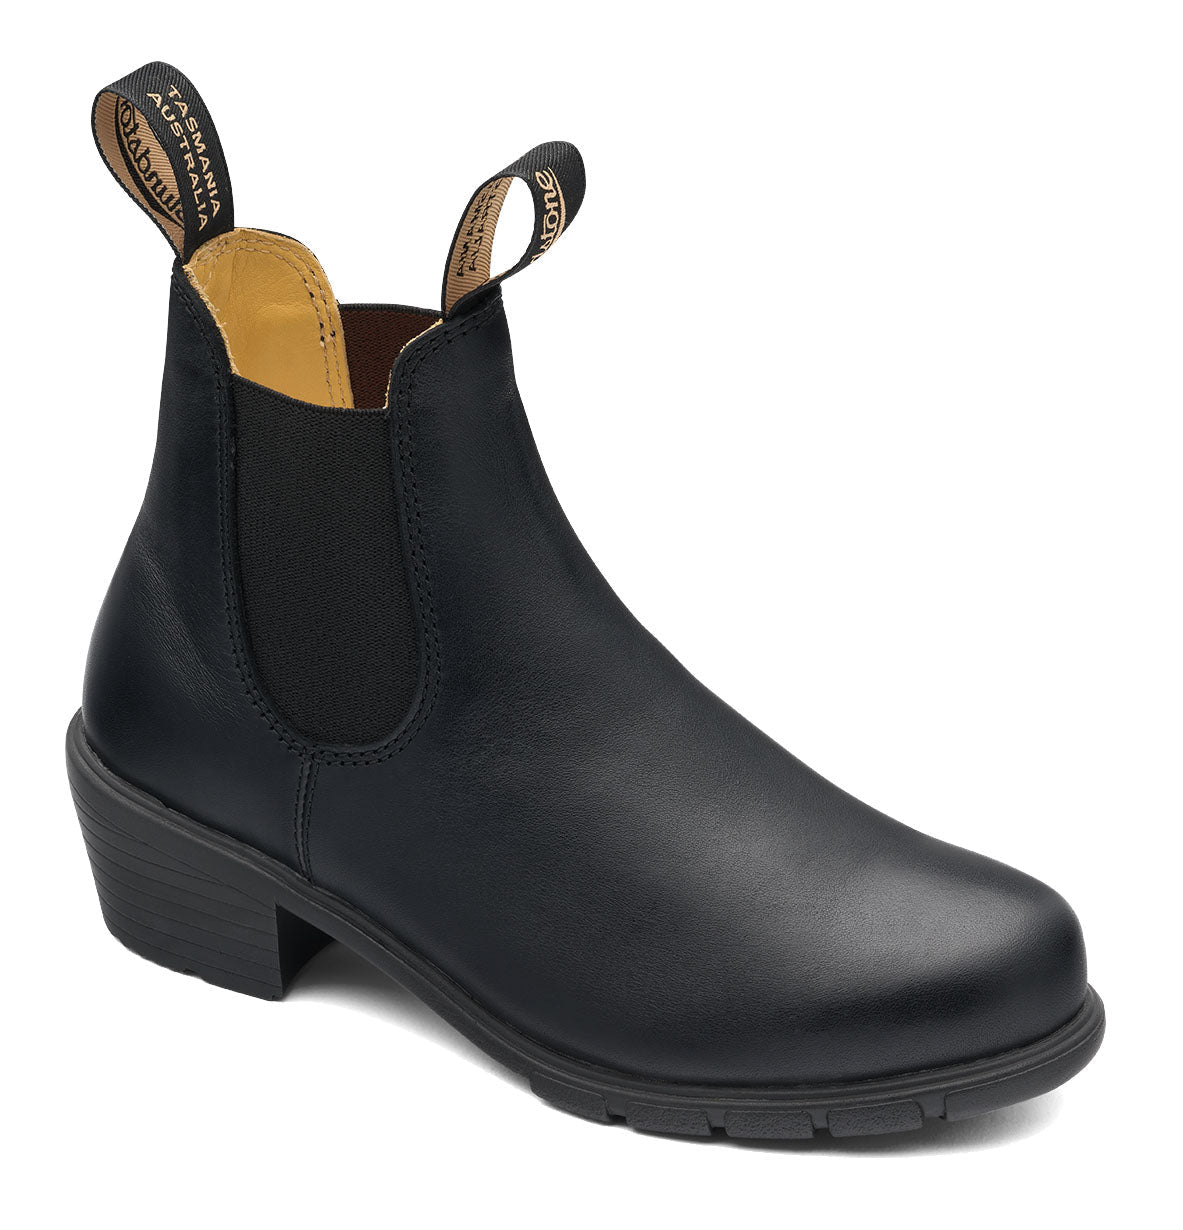 Blundstone 1671 Women's Heel Black - Grady’s Feet Essentials - Blundstone